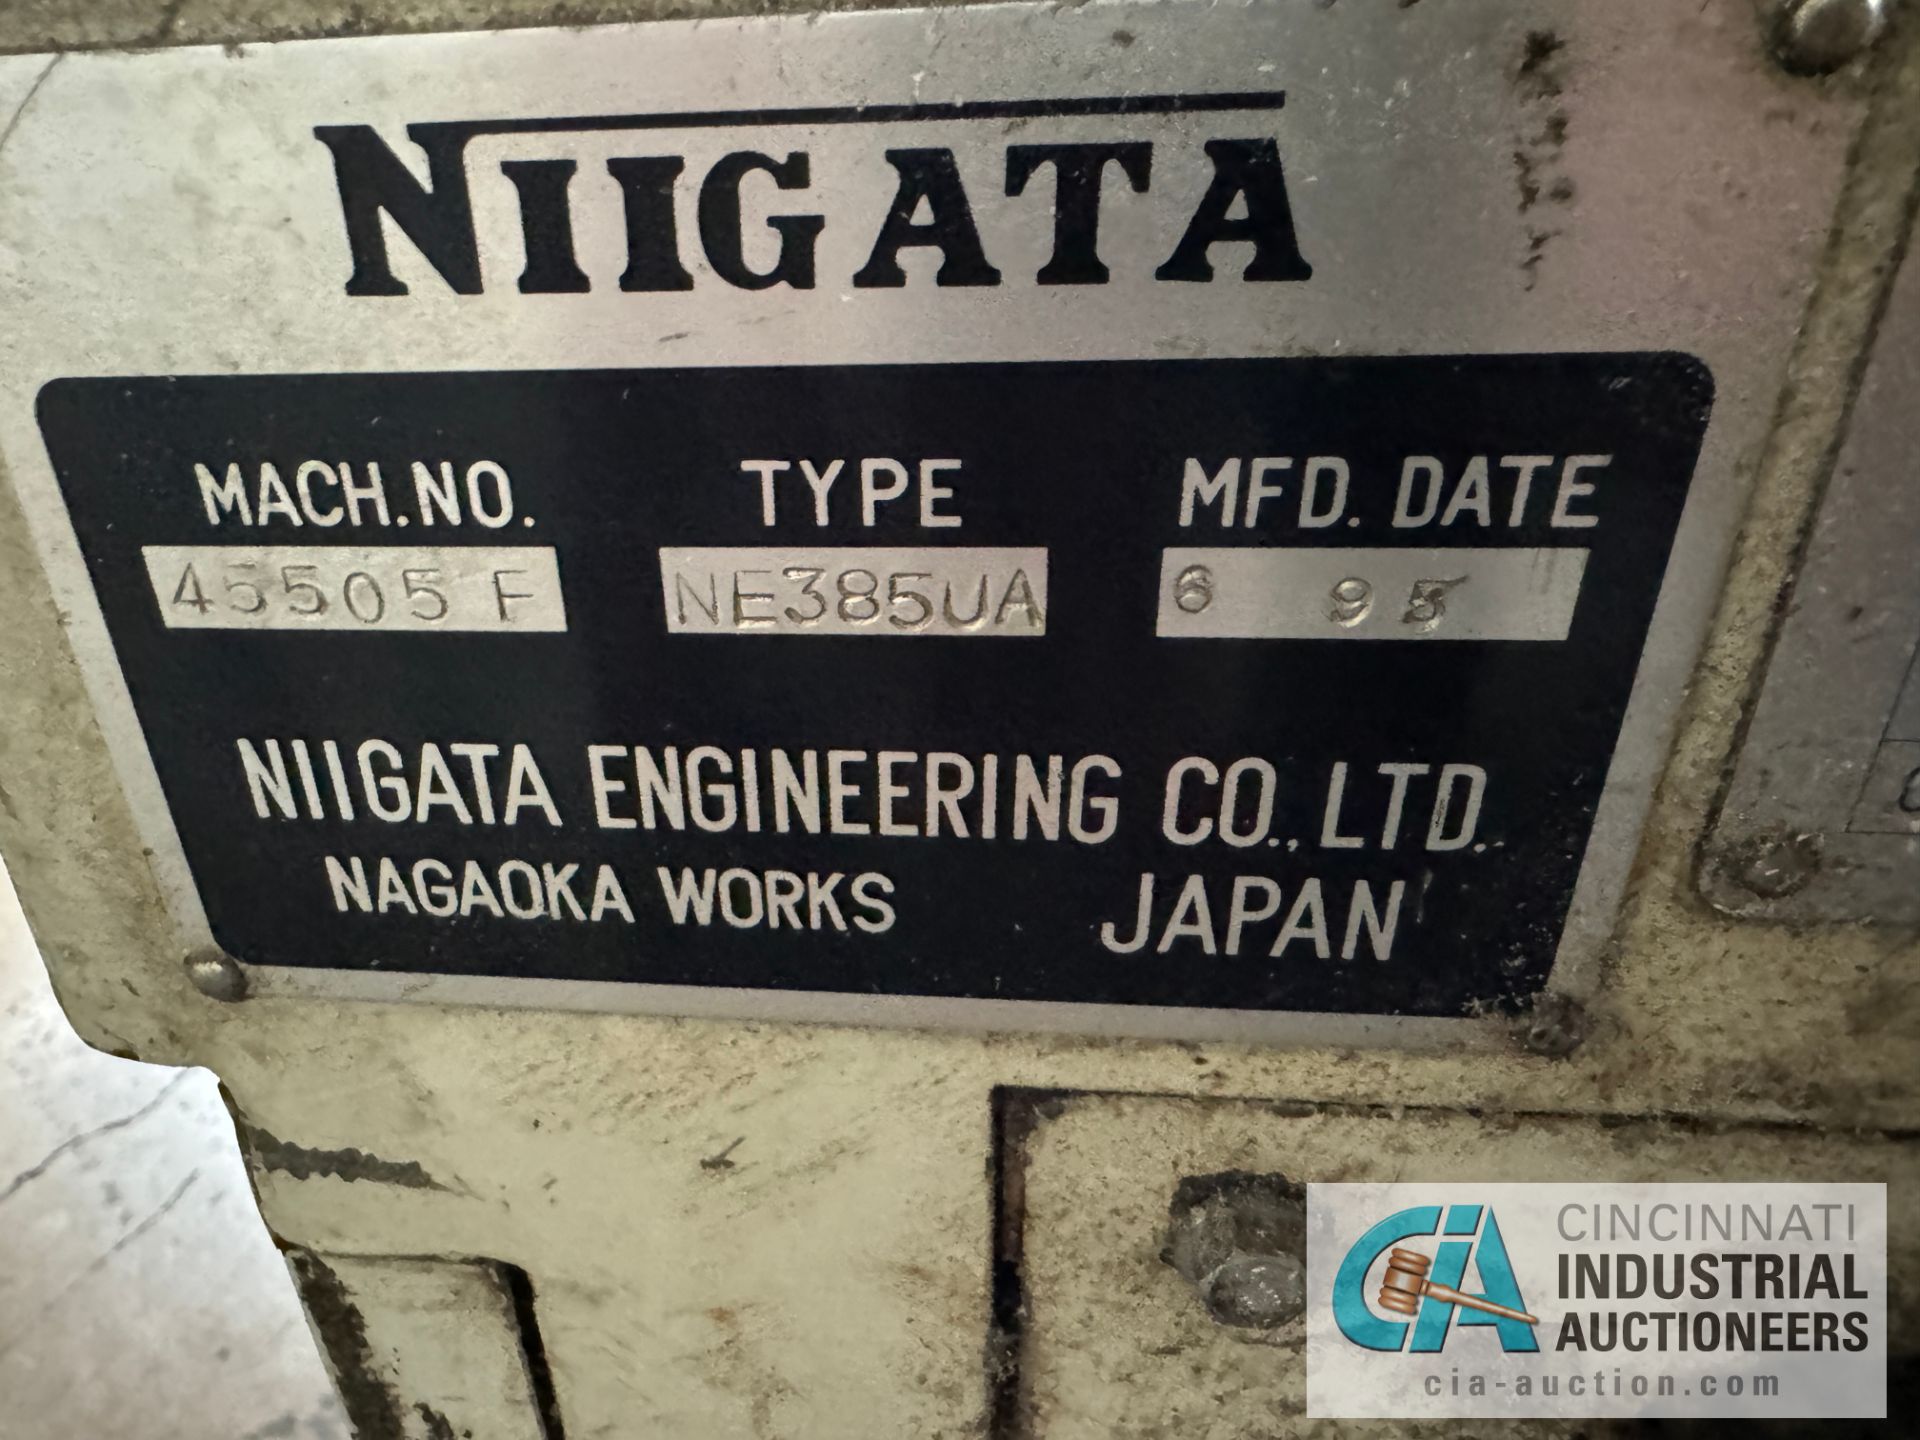 Niigata Model NE385UA4, 385-Ton x 38.63-oz, Injection Molding Machine (1995), s/n 45505F, Tie Bar - Image 8 of 8